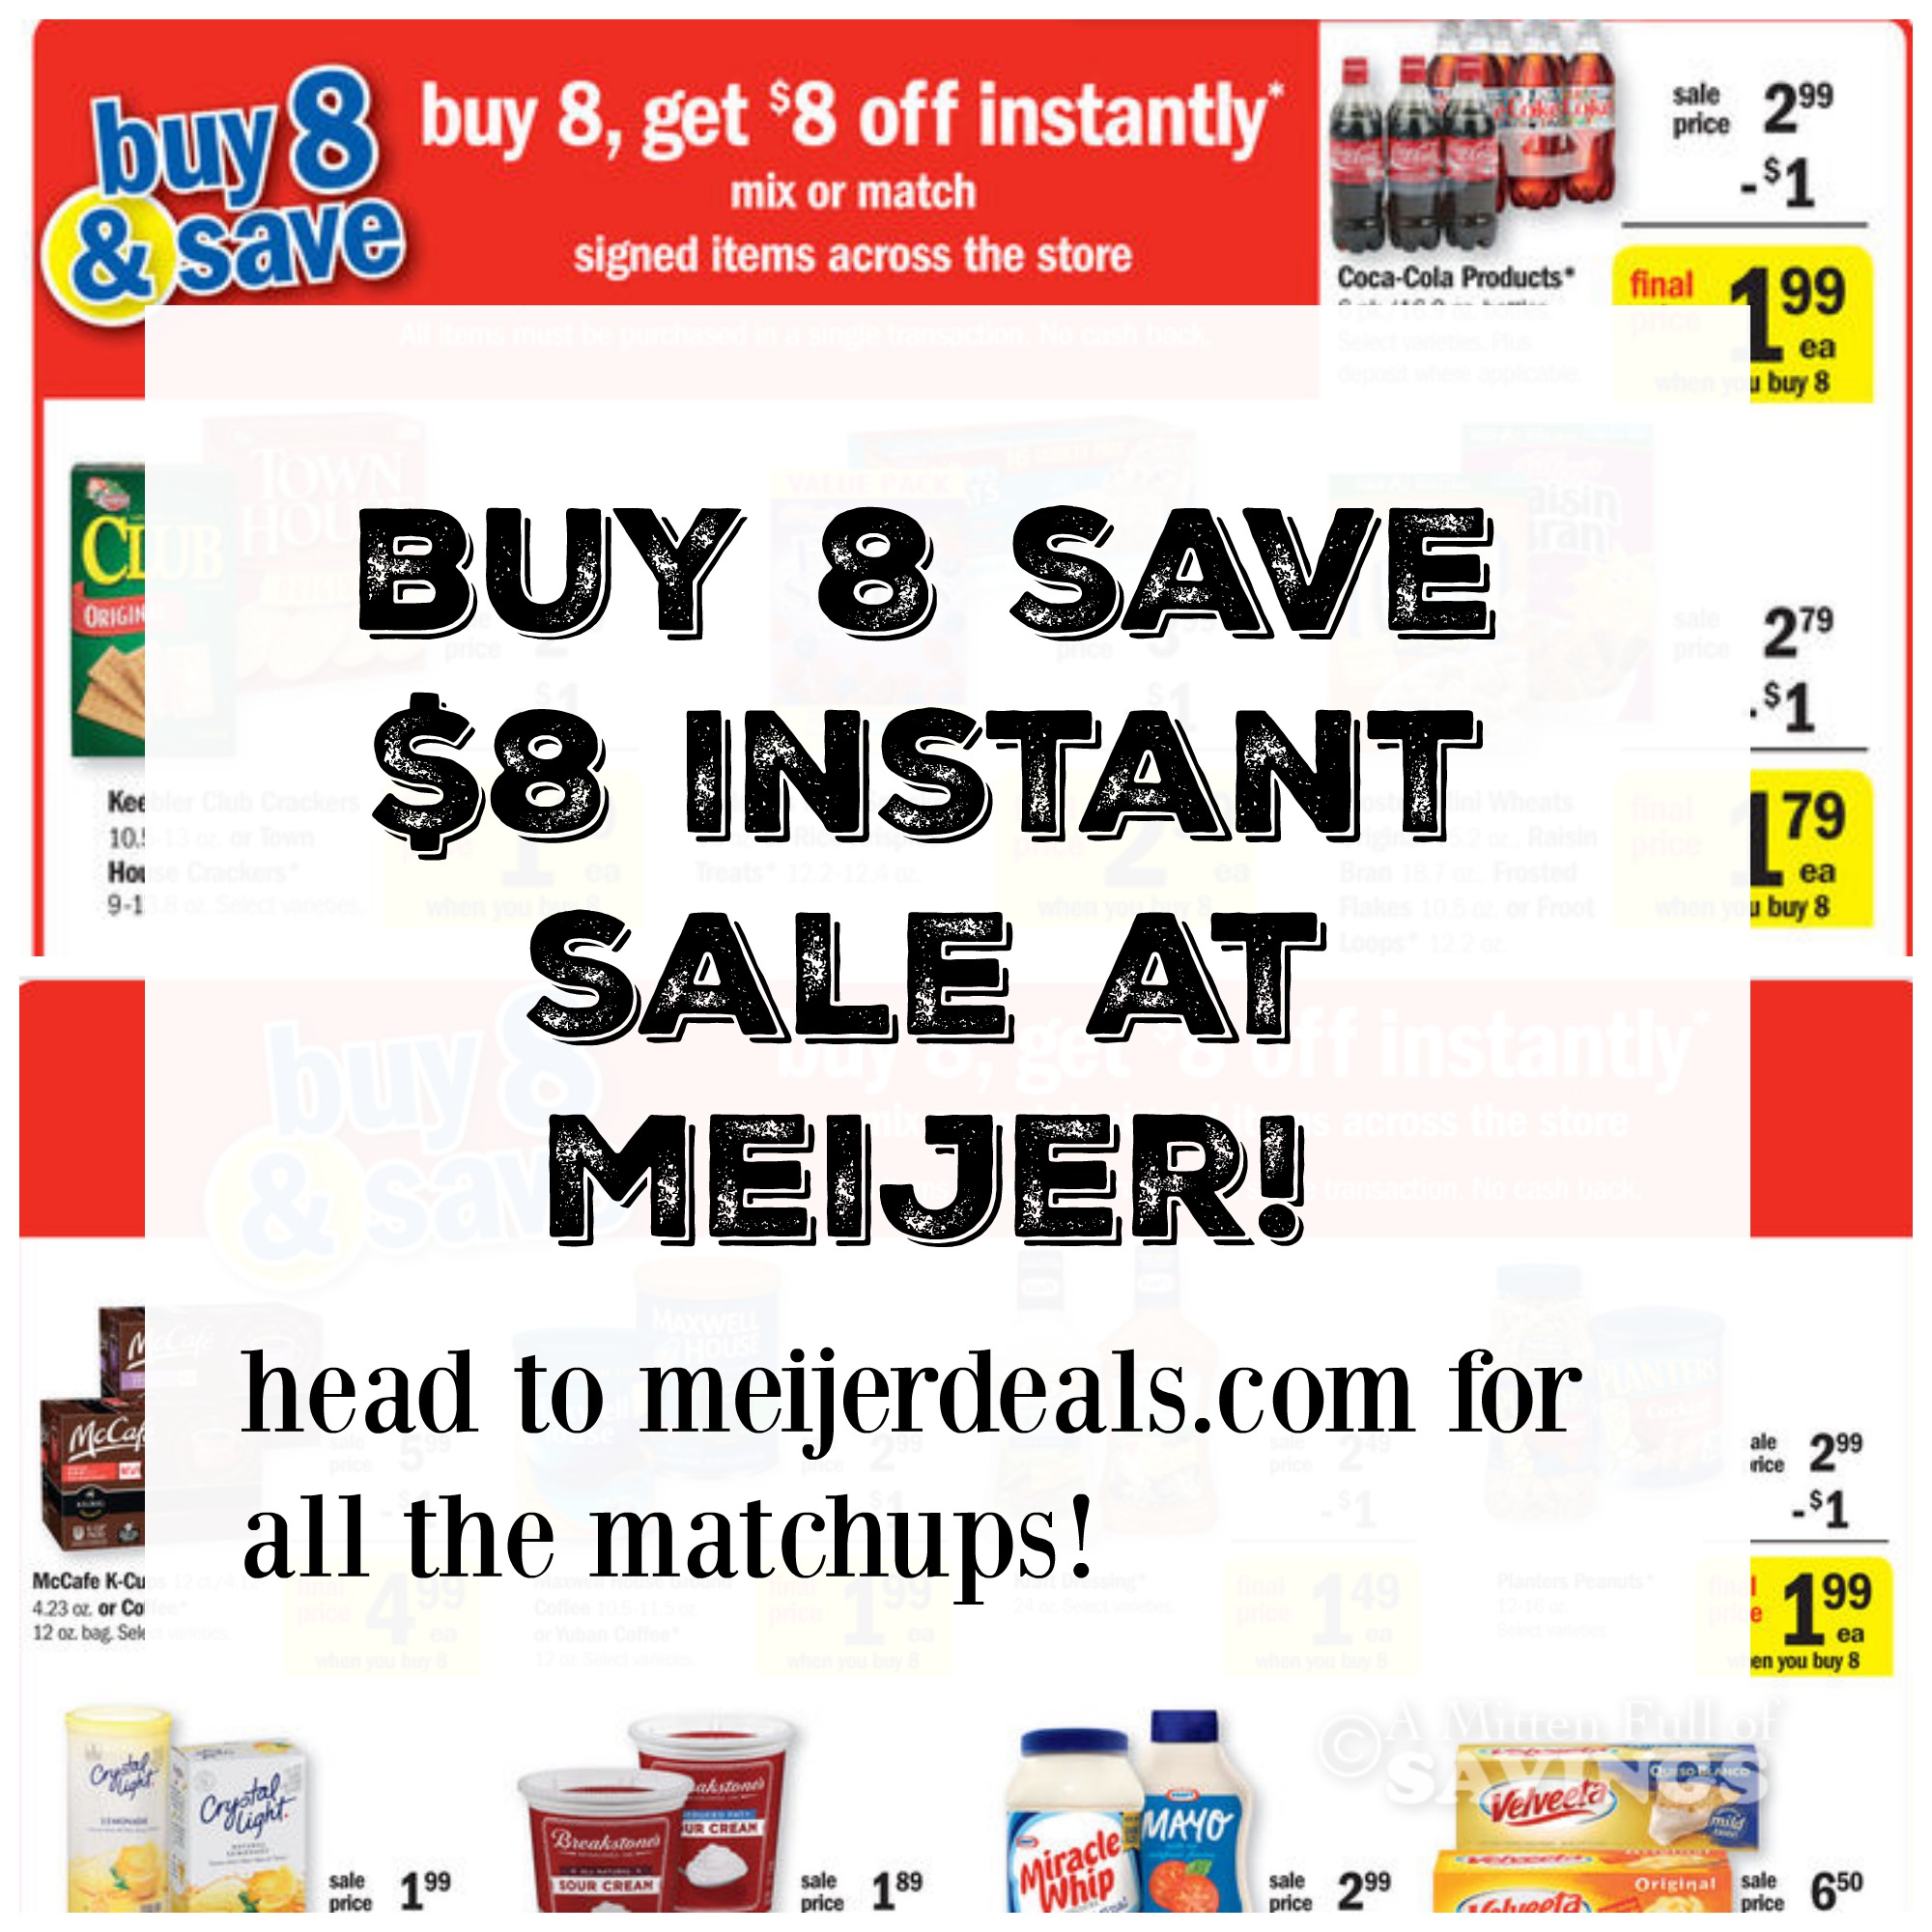 Meijer Buy 8 save $8 instant sale